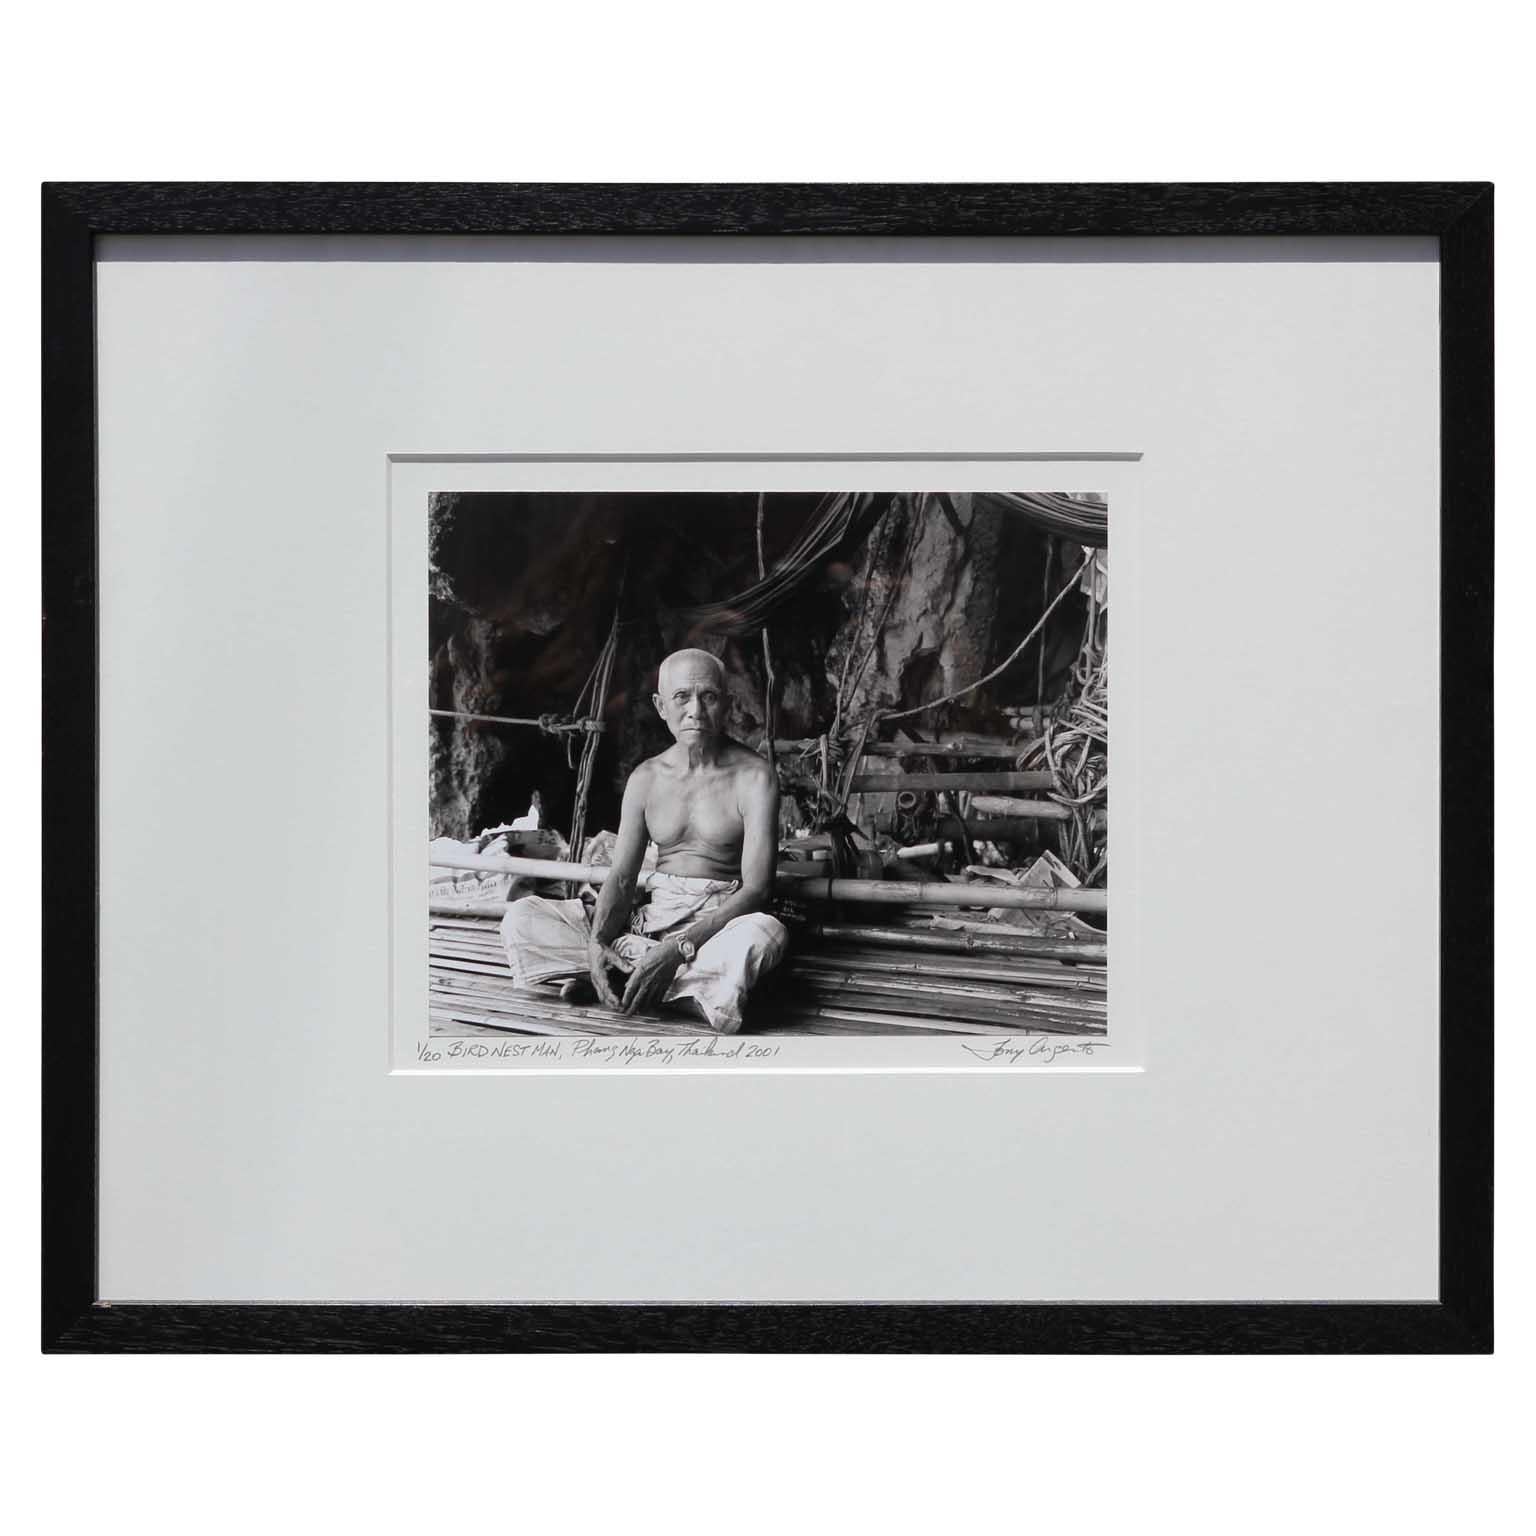 Tony Argento Black and White Photograph - "Birds Nest Man" Phrang Nga Bay, Thailand Black and White Figurative Photograph